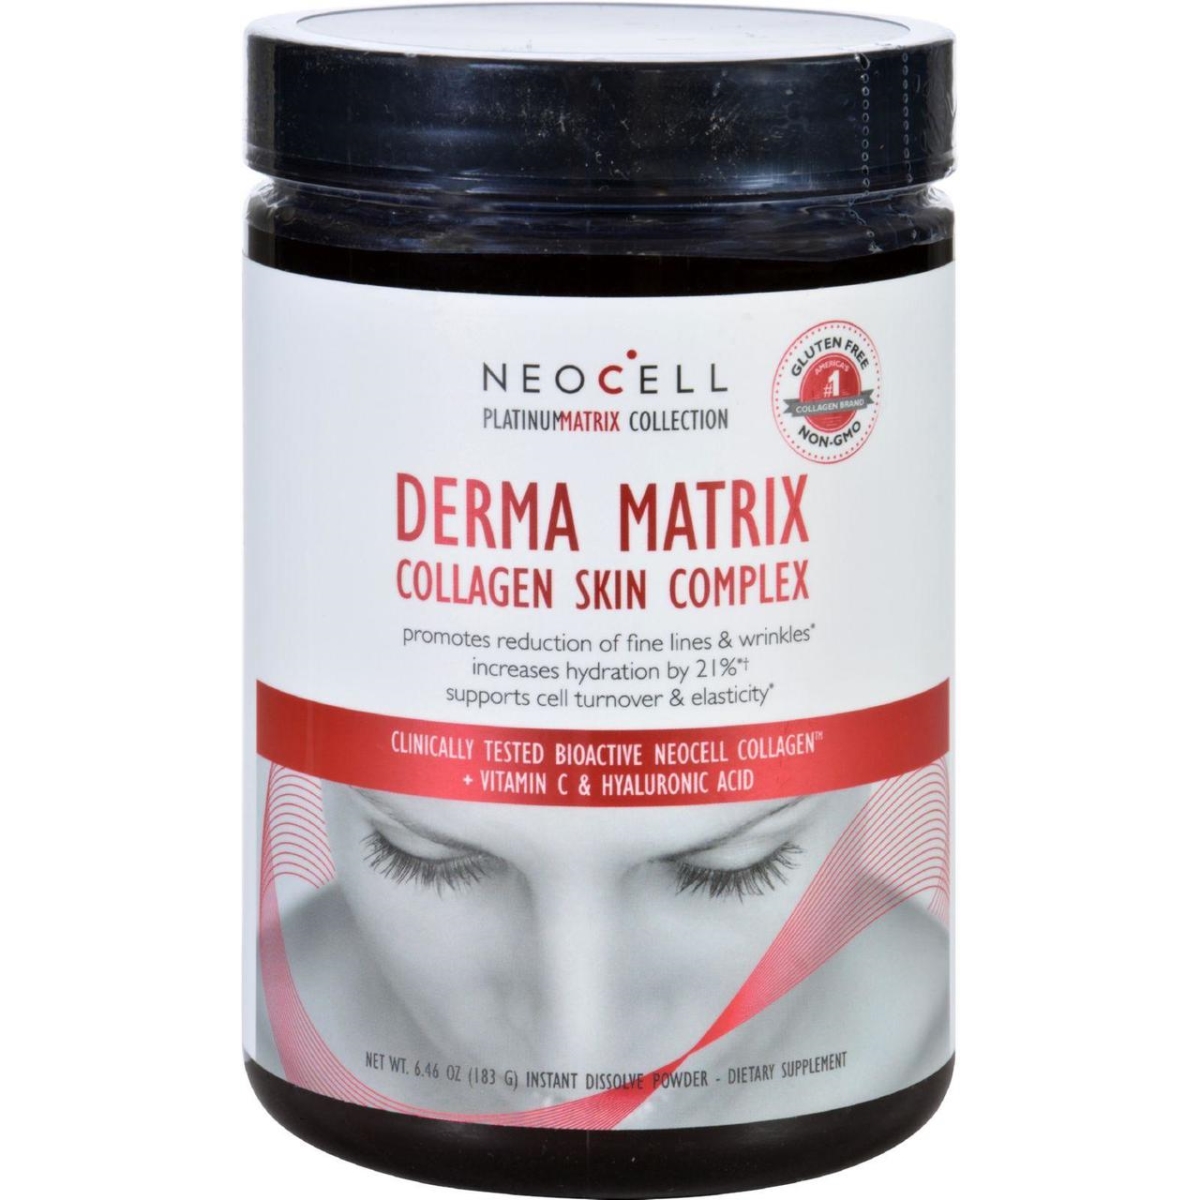 Hg1724913 Collagen Skin Complex Derma Matrix Platinum Matrix Instantly Dissolving - 90 Capsules